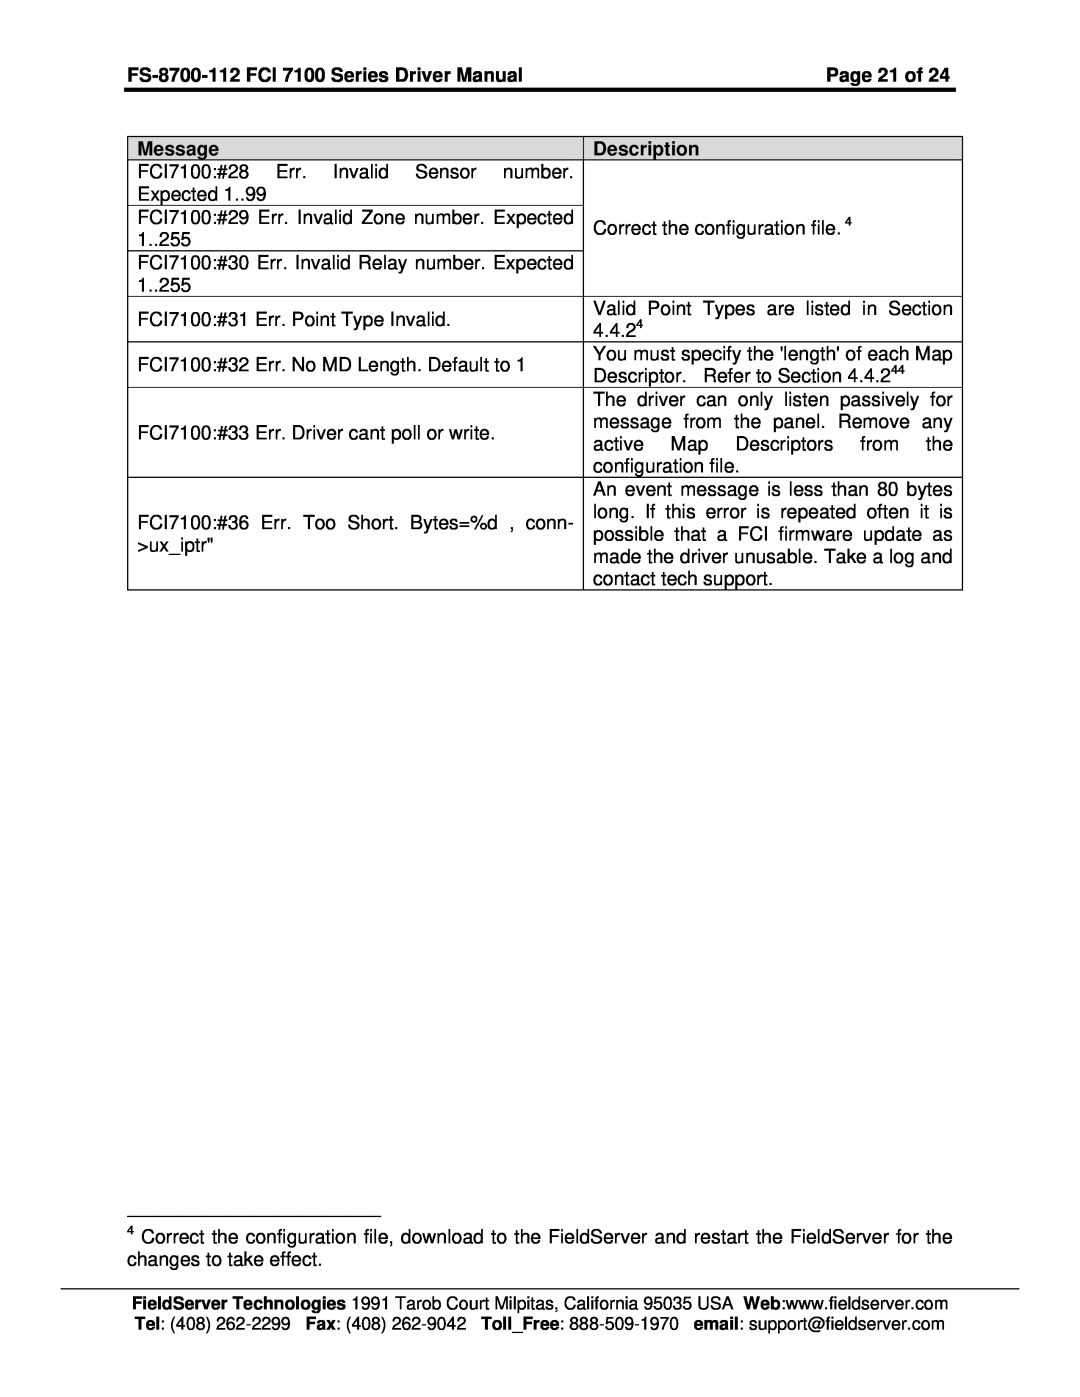 FieldServer instruction manual Page 21 of, FS-8700-112 FCI 7100 Series Driver Manual, Message, Description 